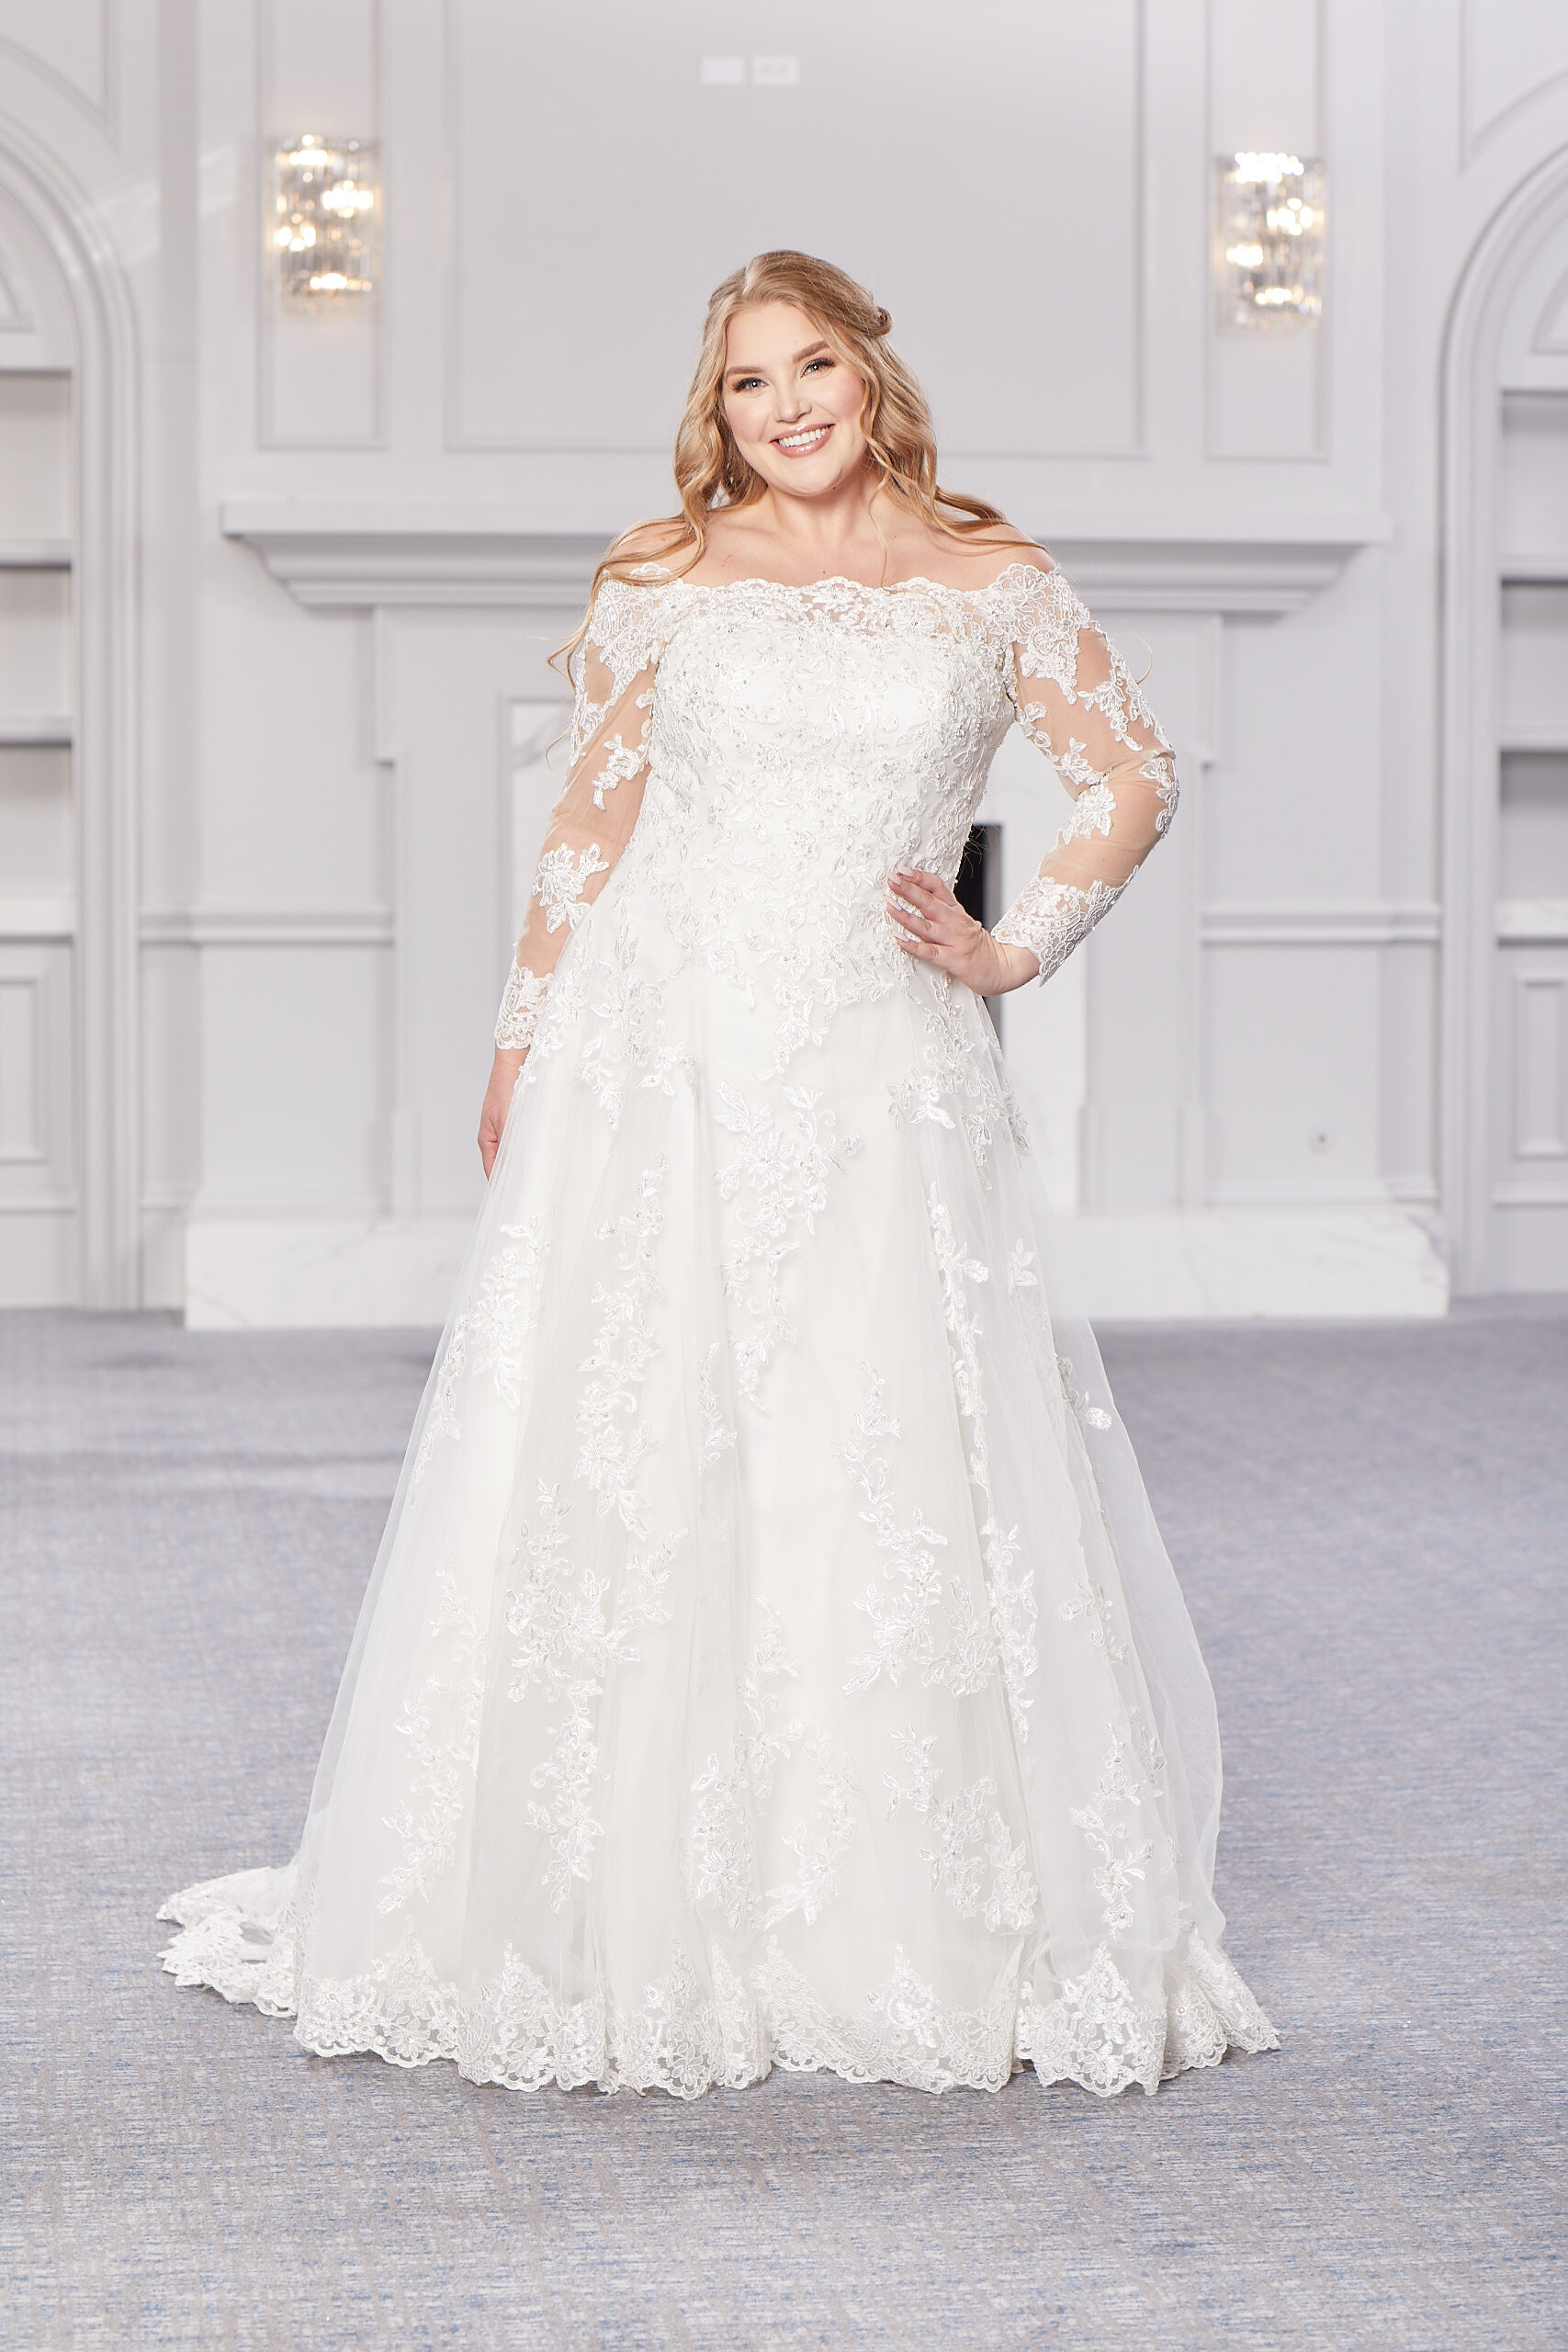 Brides-by-Young-Plus-Size-Bridal-Curvy-Wedding-Dress-New-Jersey-Indiana-Chicago-Illinois-ANASTASIA_1448.jpg